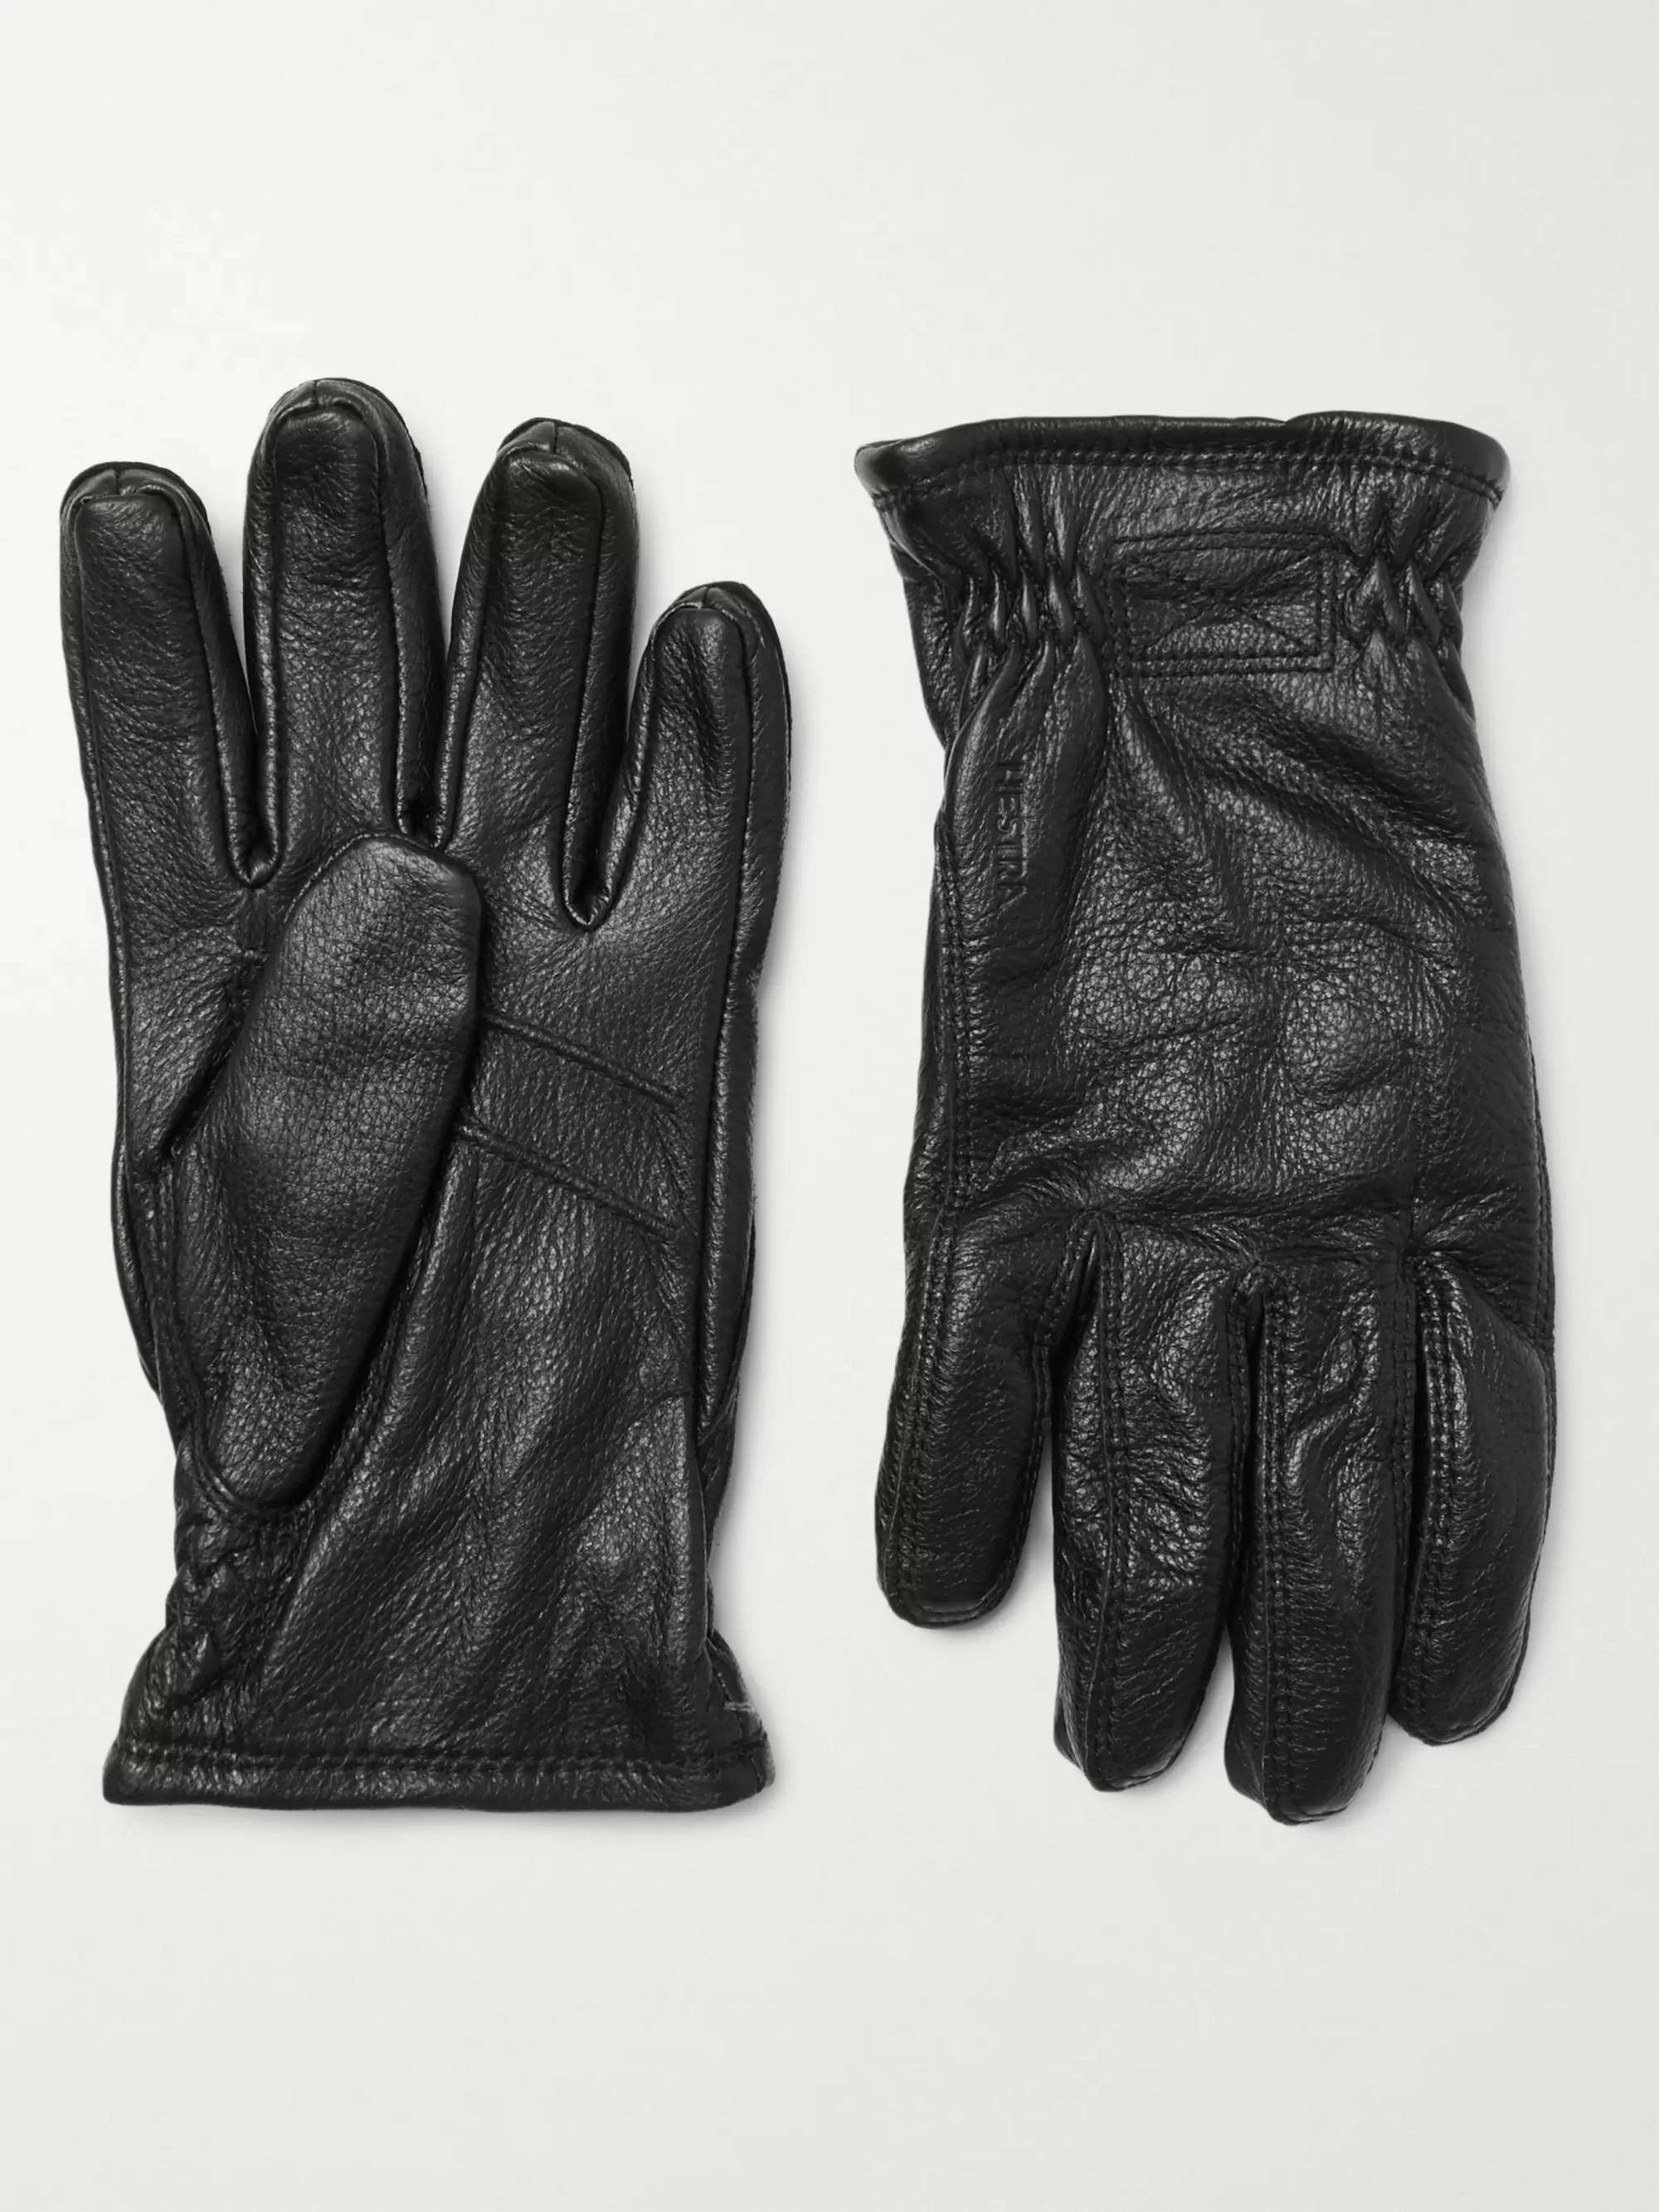 HESTRA Sarna Leather Gloves